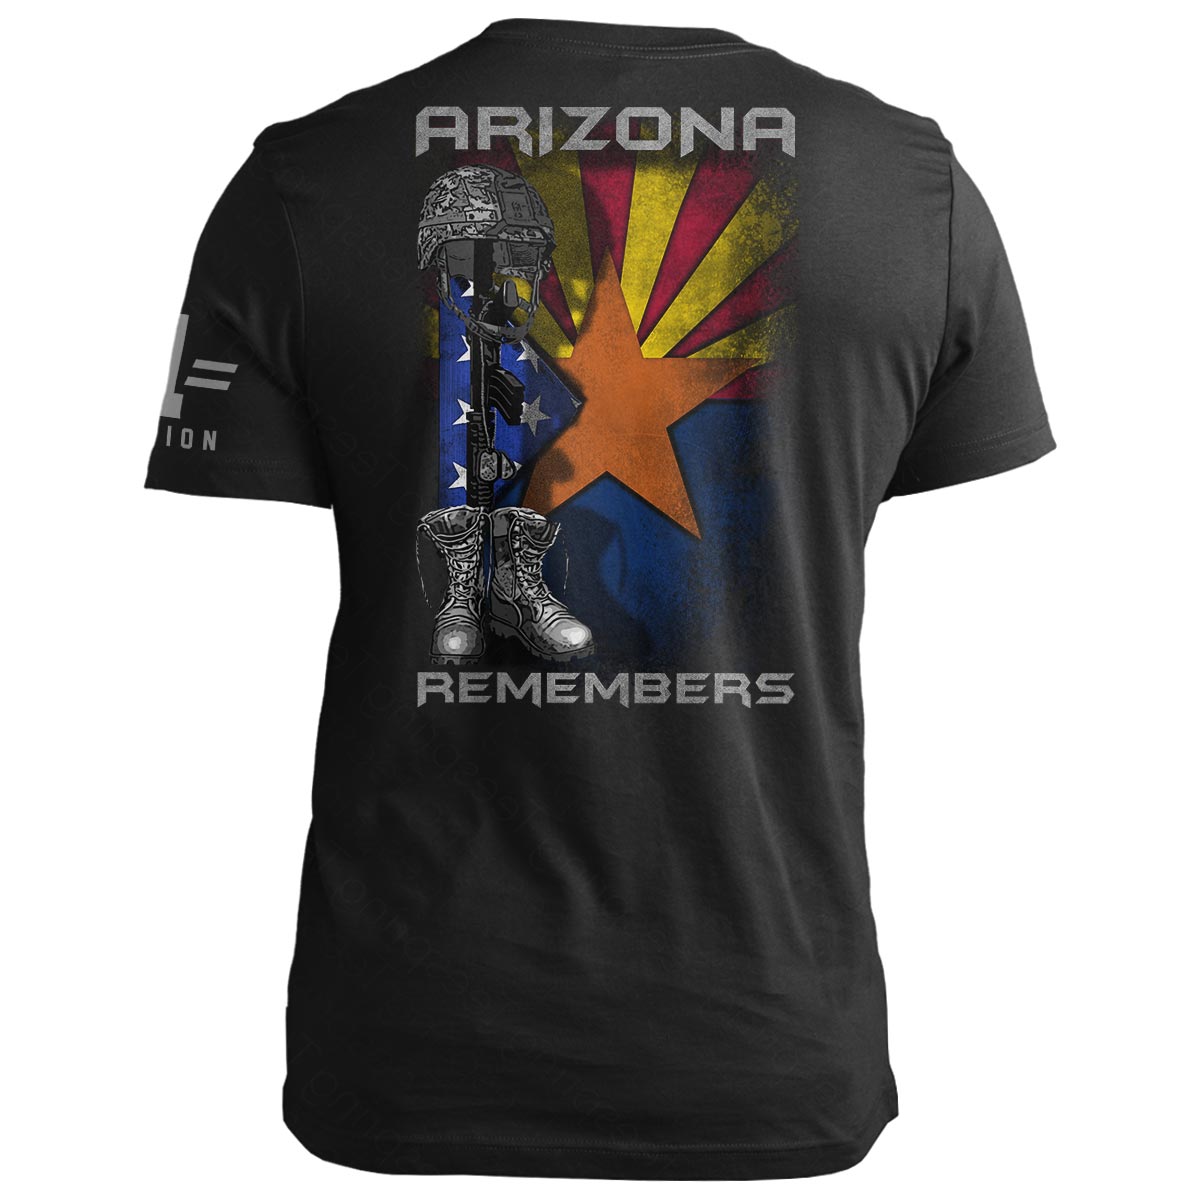 Arizona Remembers